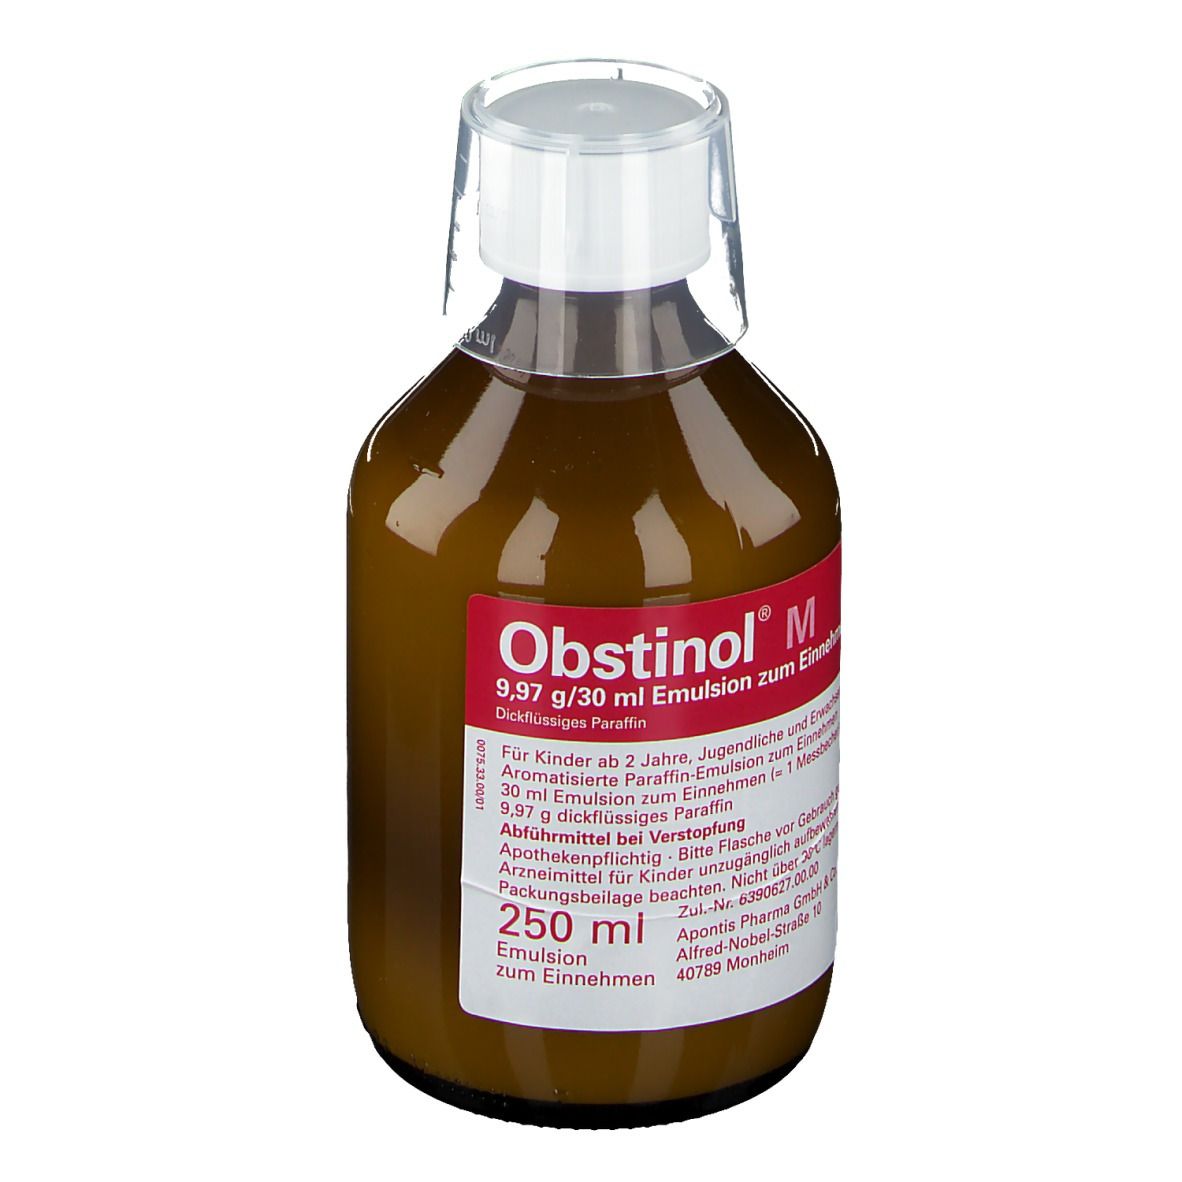 Obstinol M Emulsion